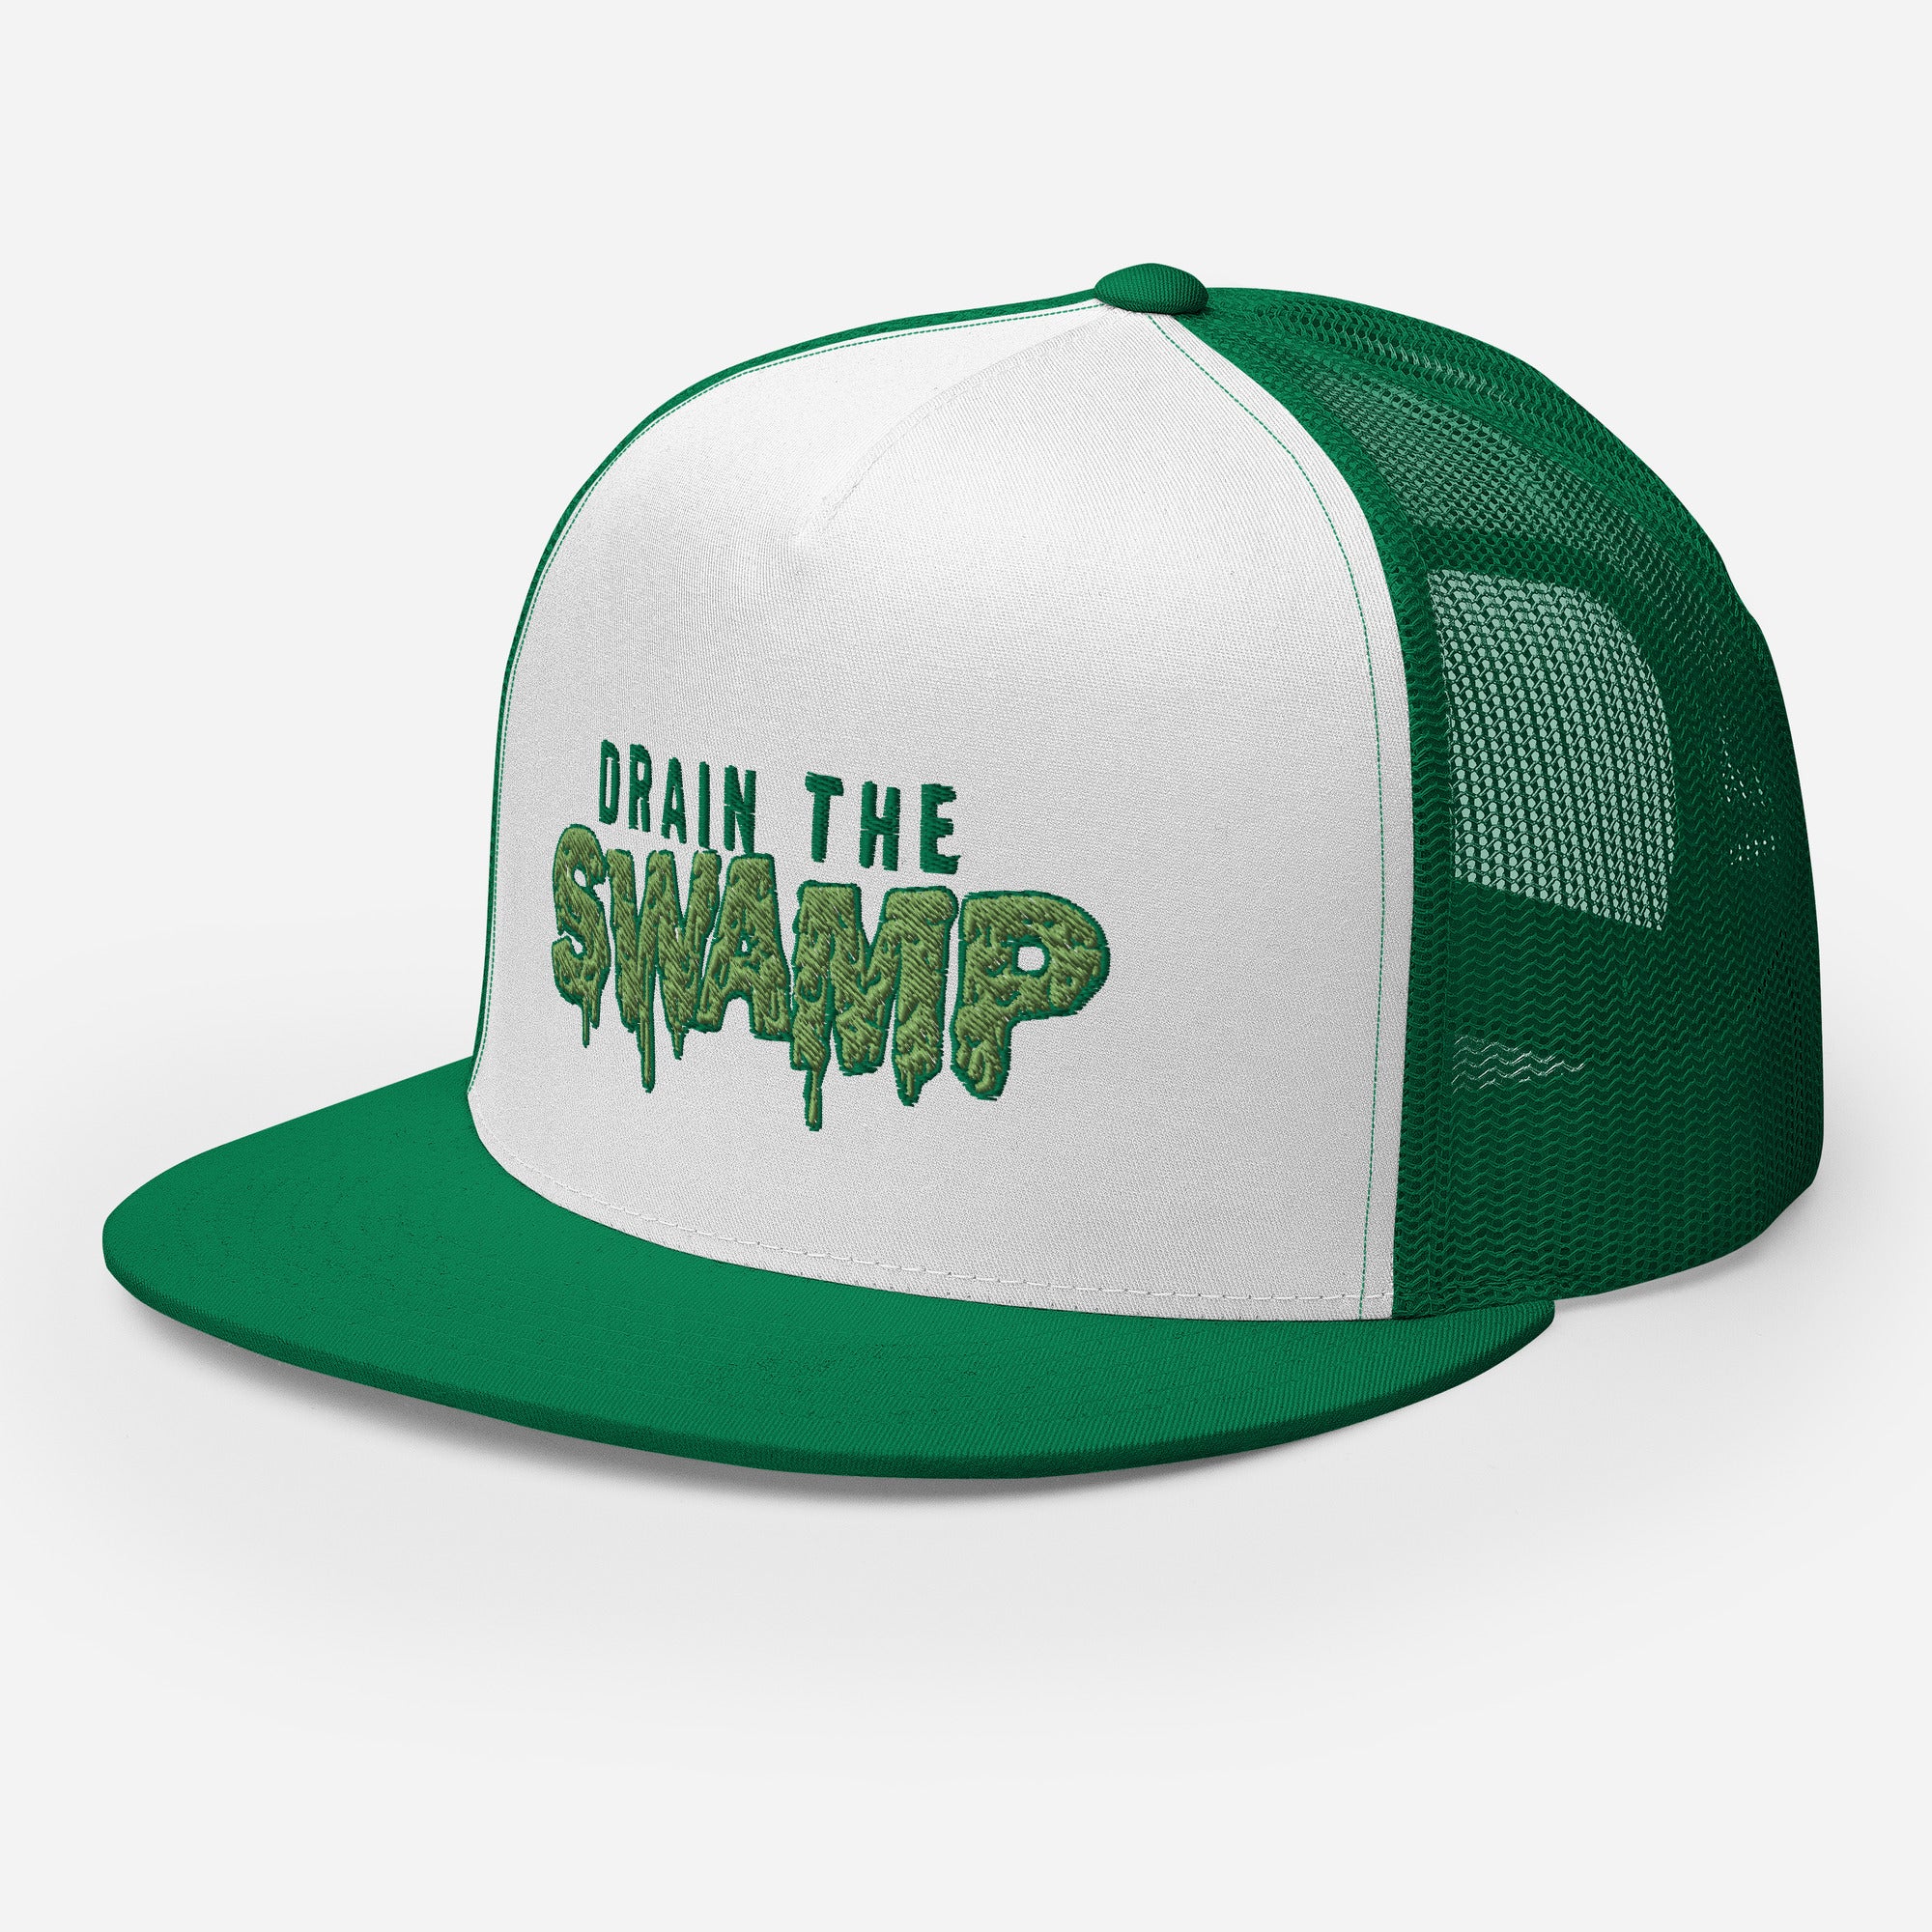 Drain the Swamp Trucker Cap